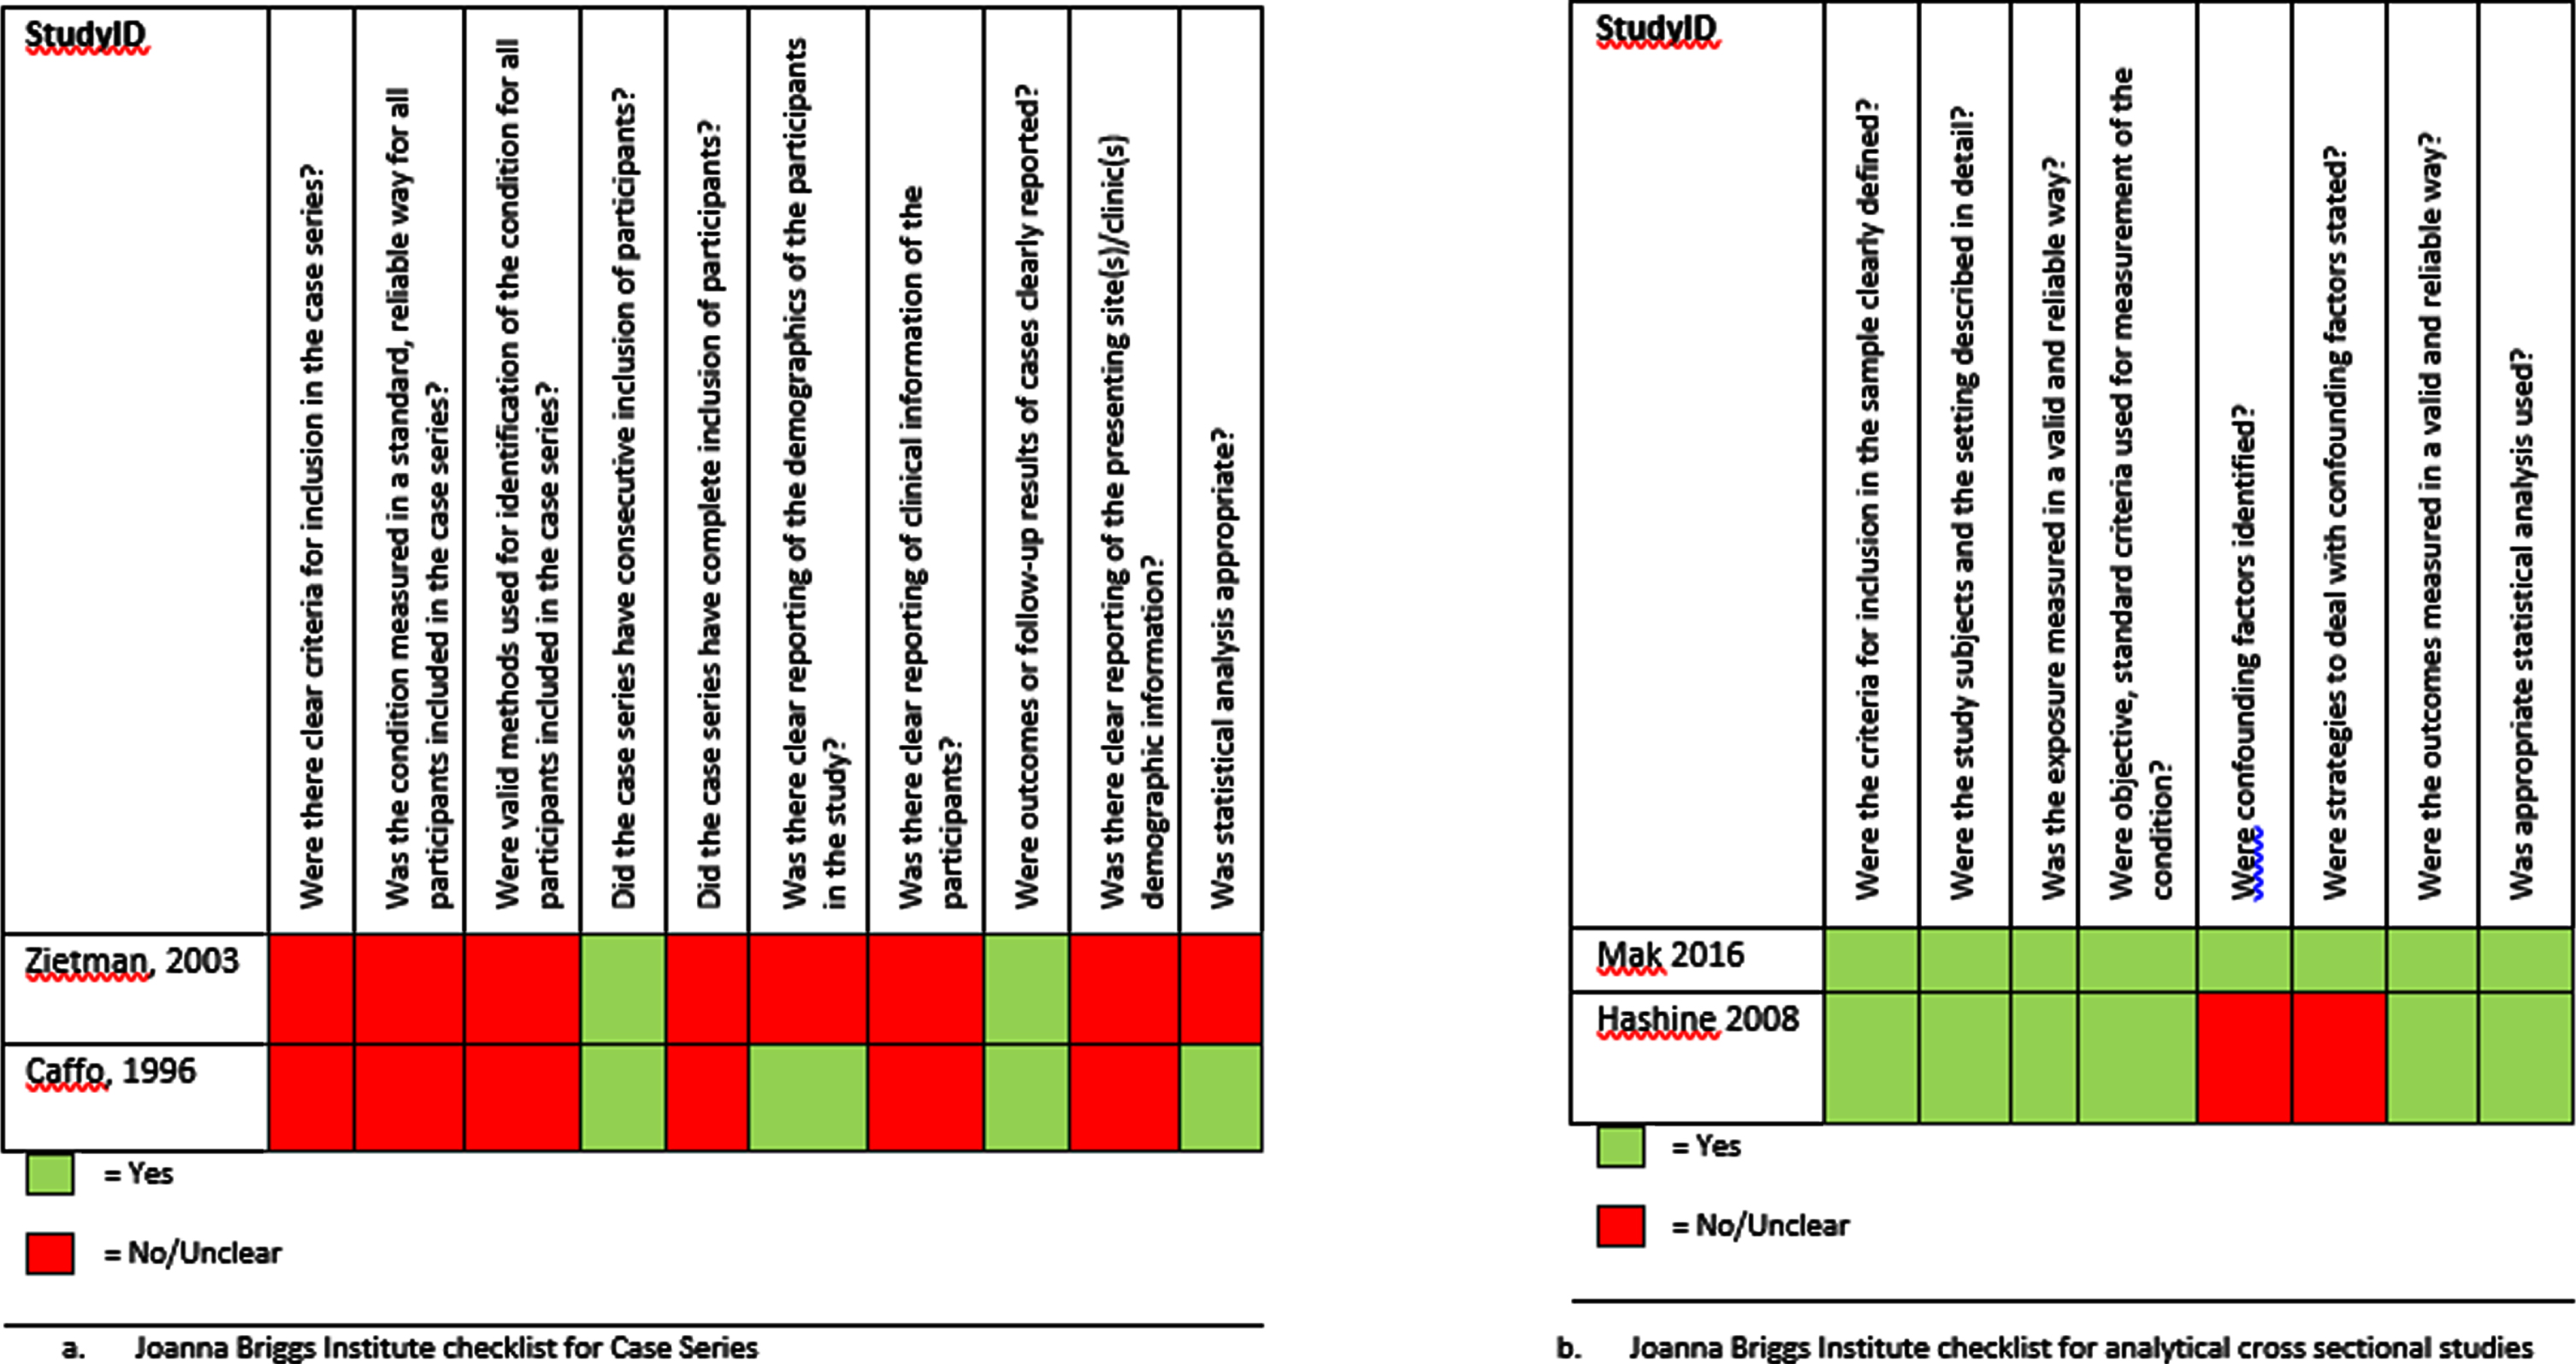 Critical appraisal of the retrospective studies using the JBI checklists.